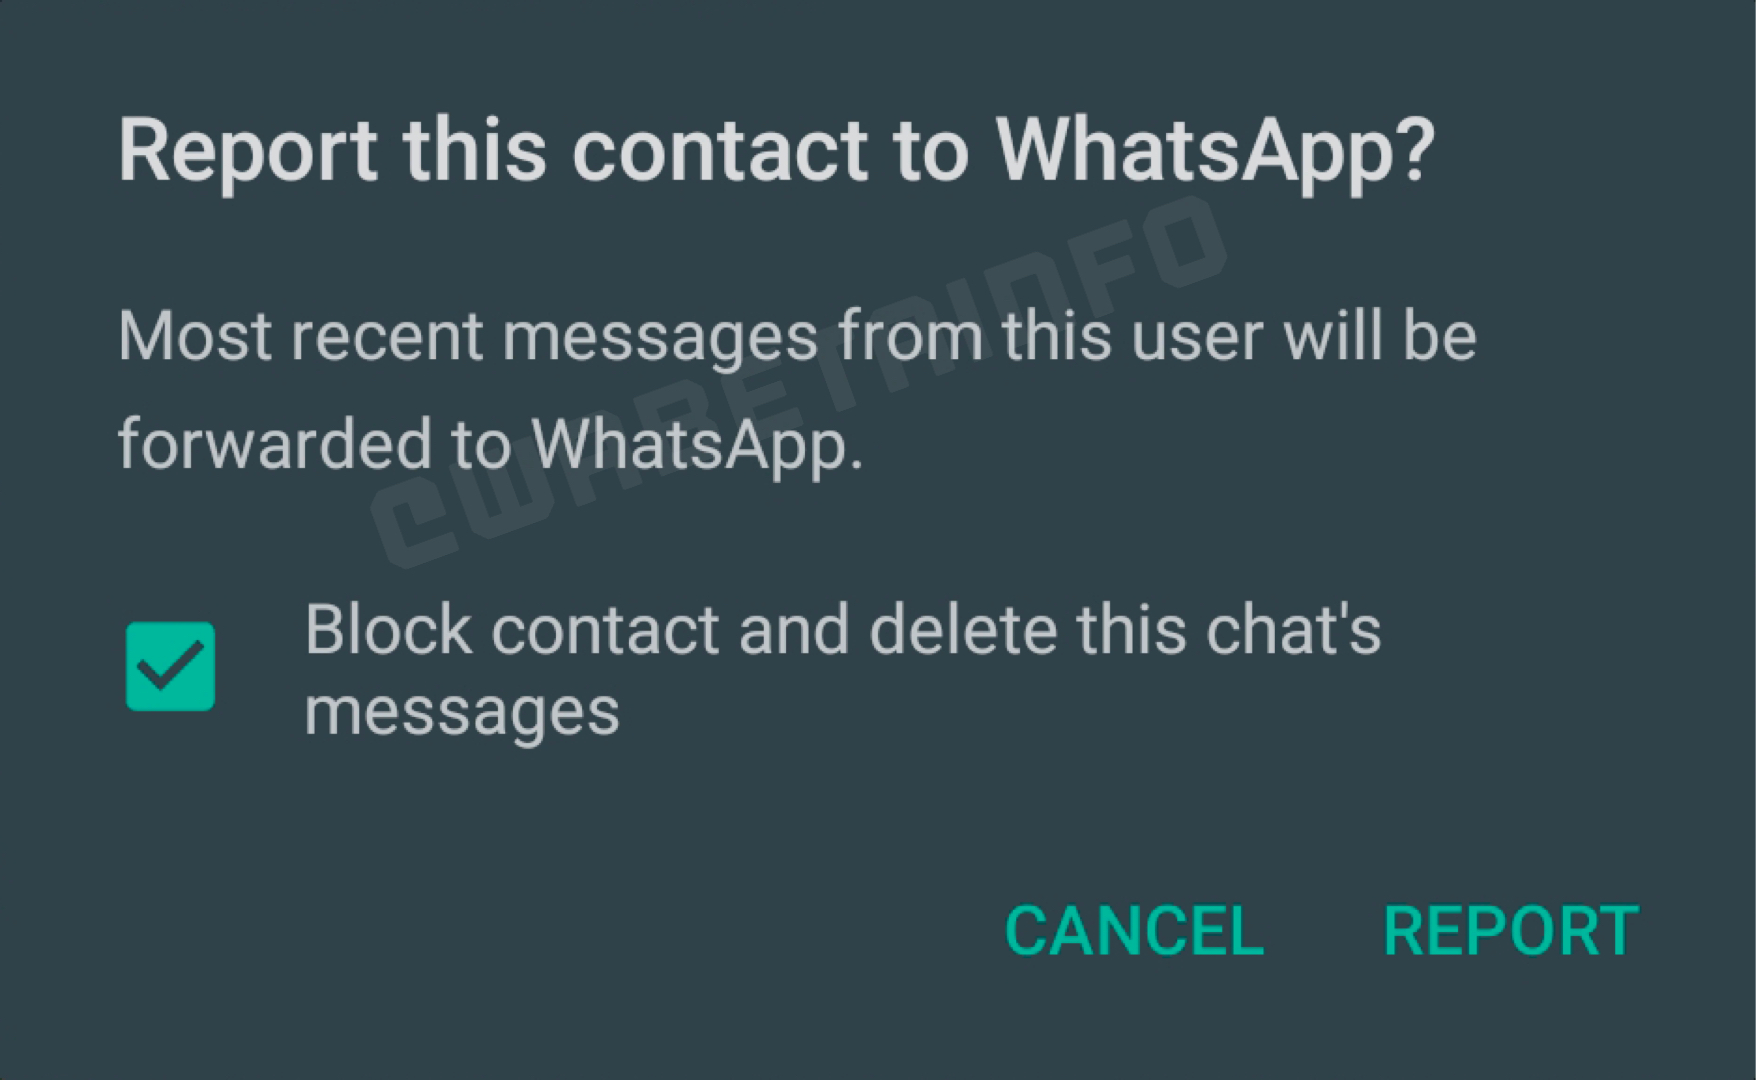 WhatsApp-klagomålskonversation